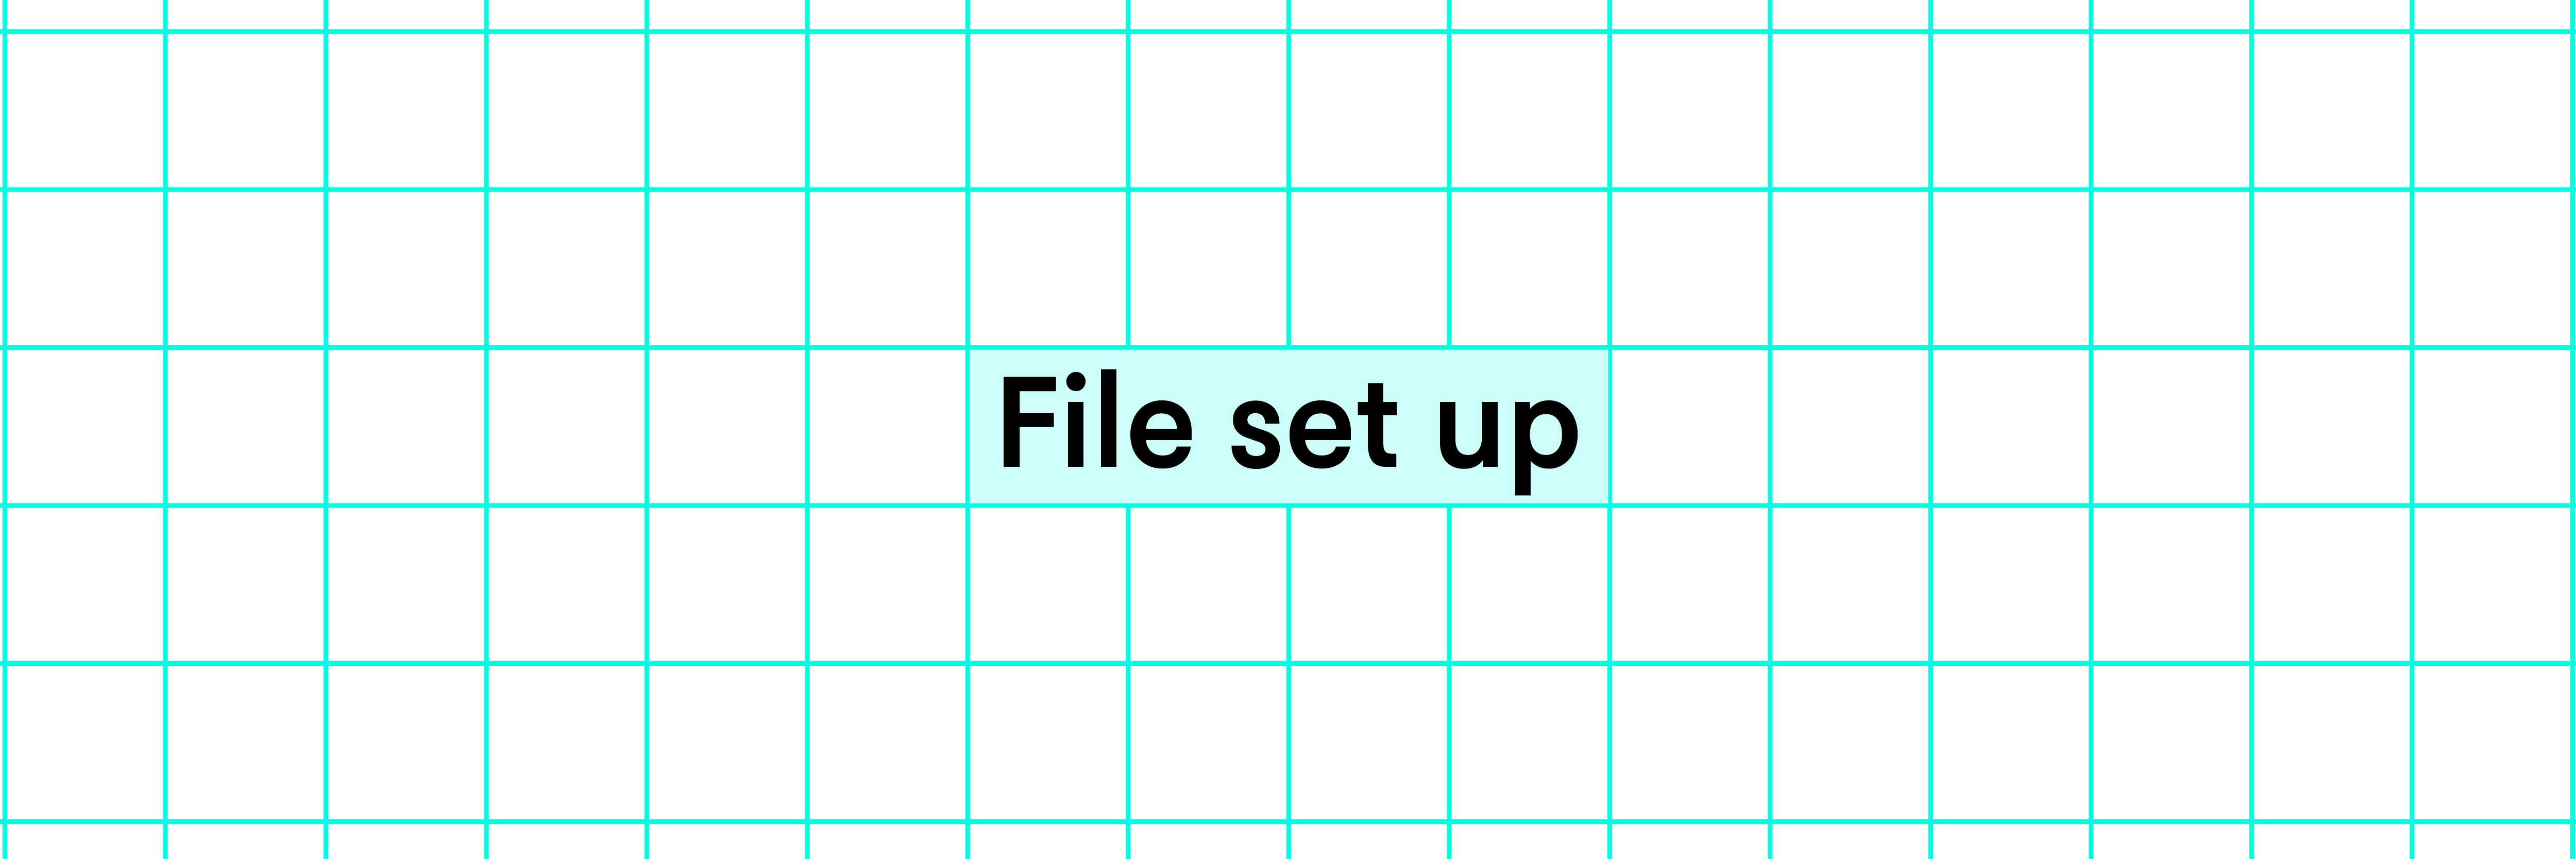 File setup